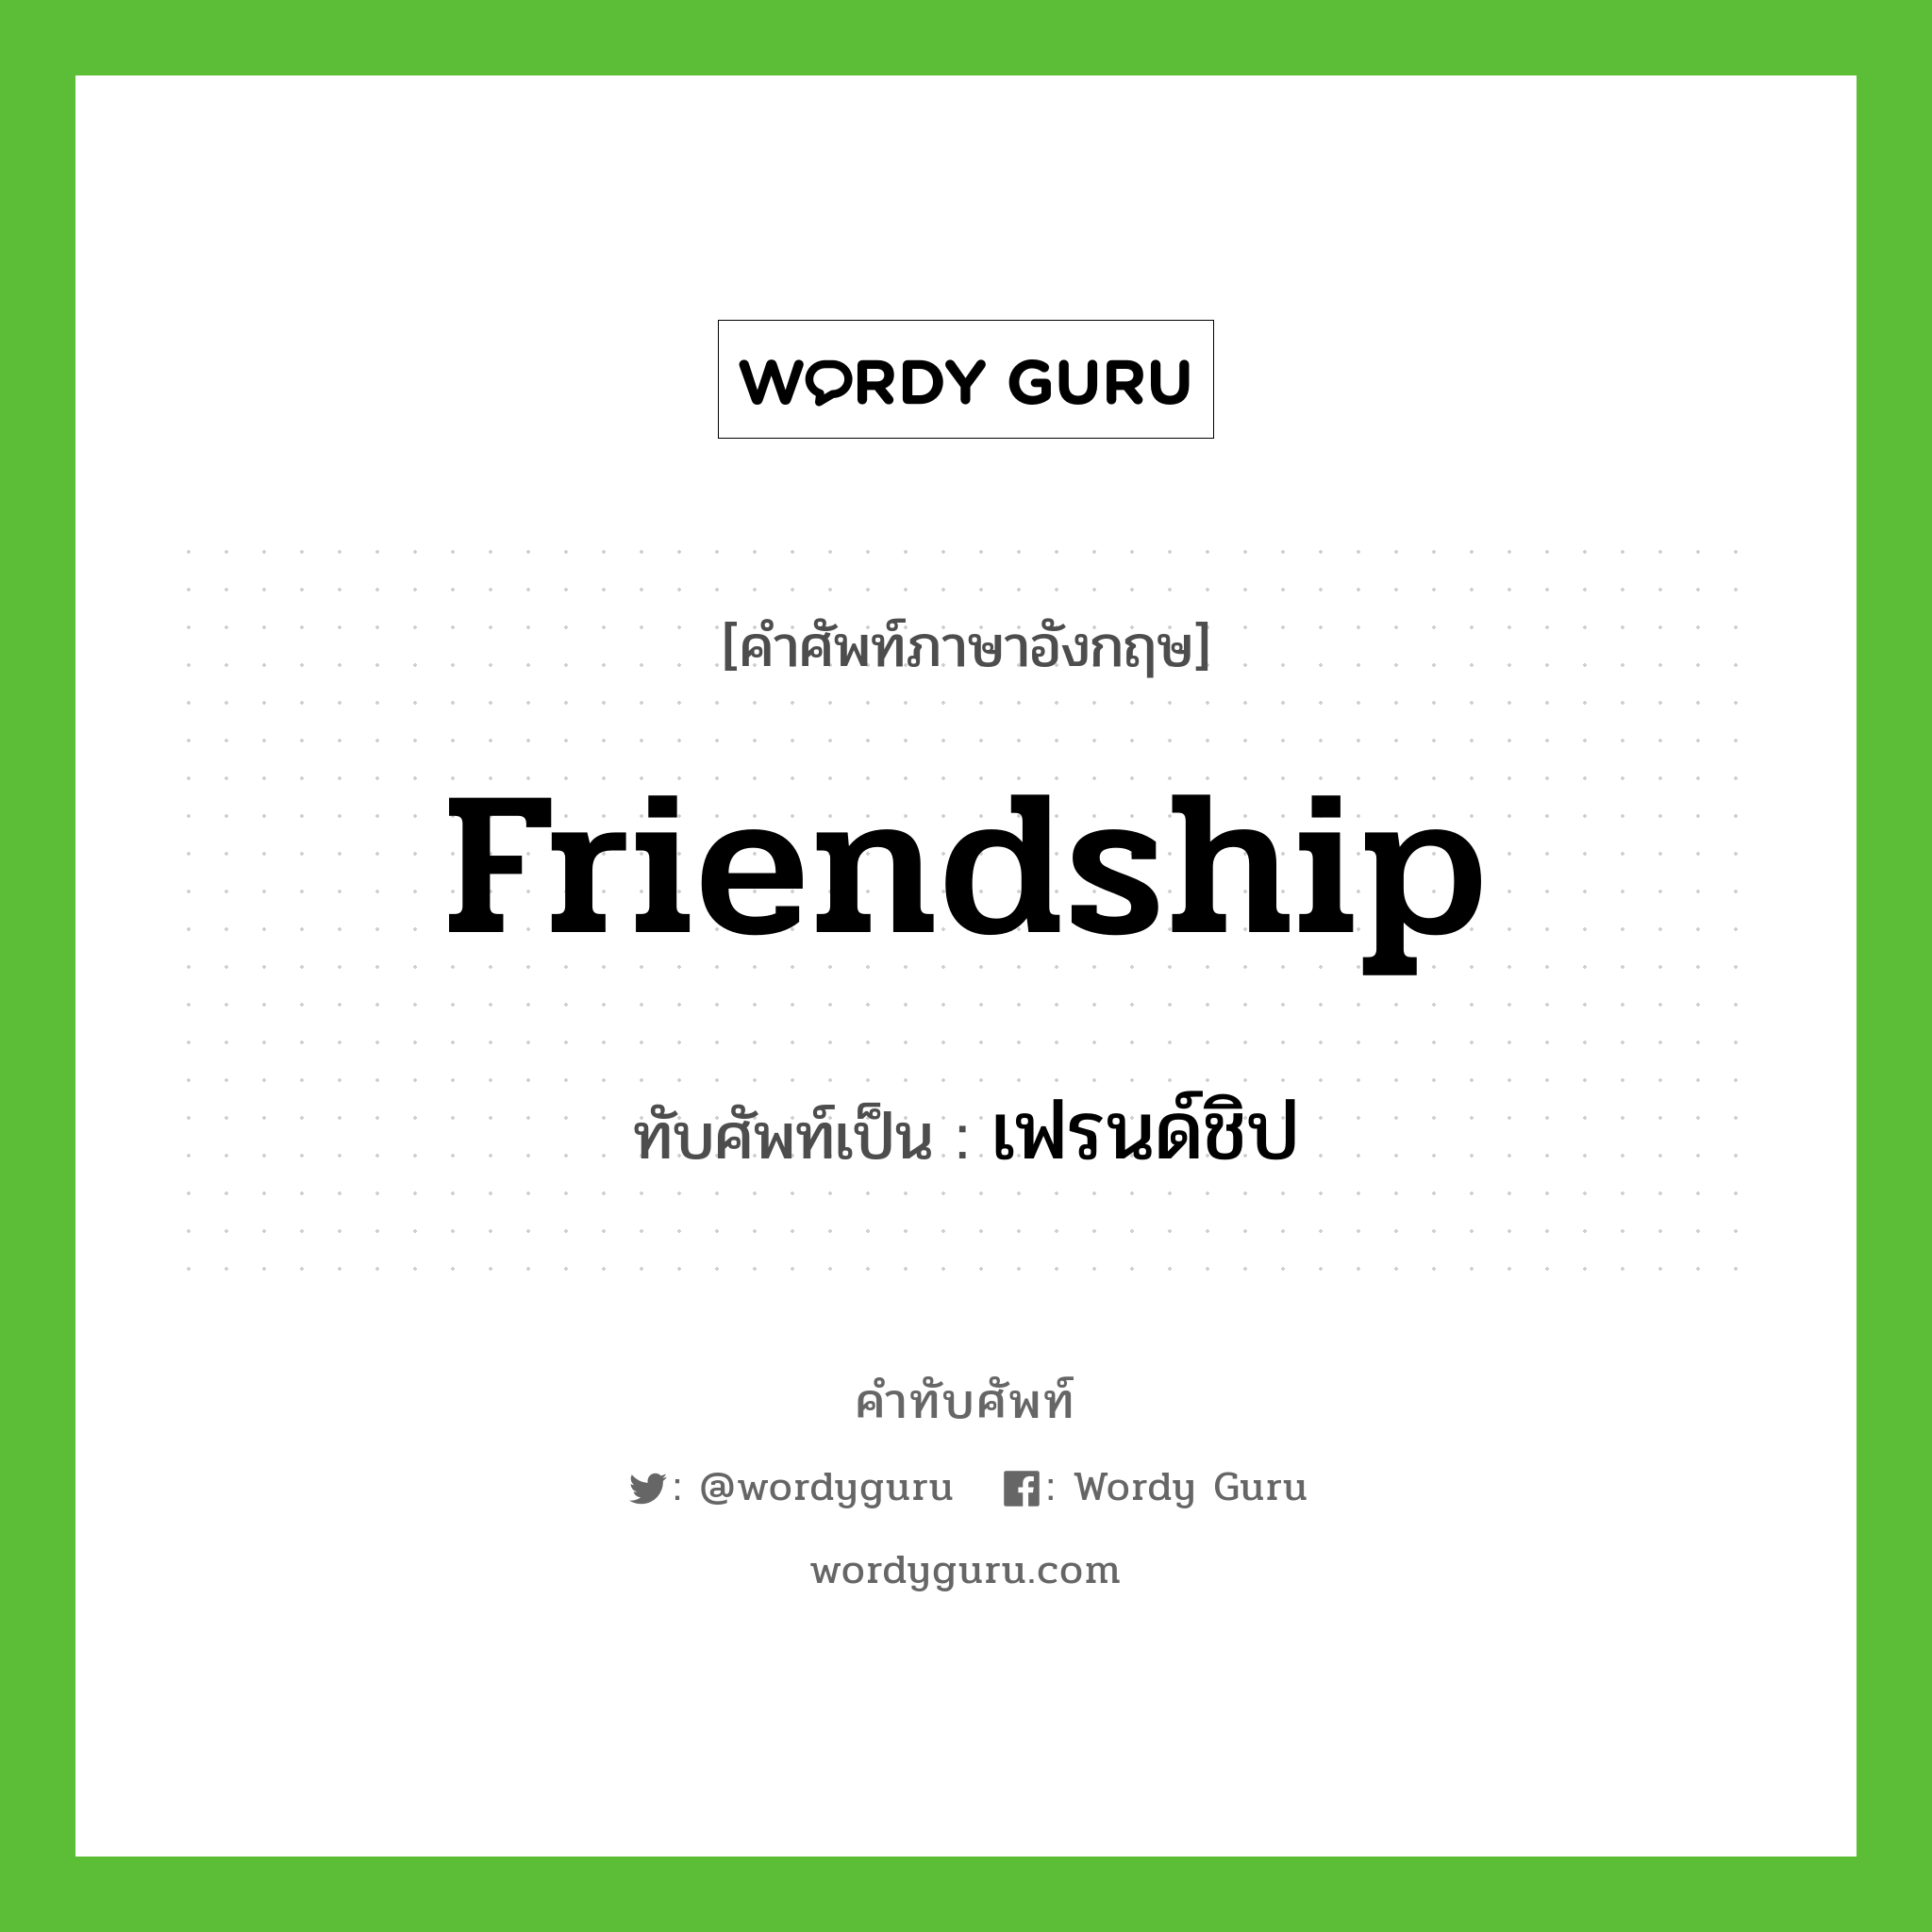 friendship เขียนเป็นคำไทยว่าอะไร?, คำศัพท์ภาษาอังกฤษ friendship ทับศัพท์เป็น เฟรนด์ชิป